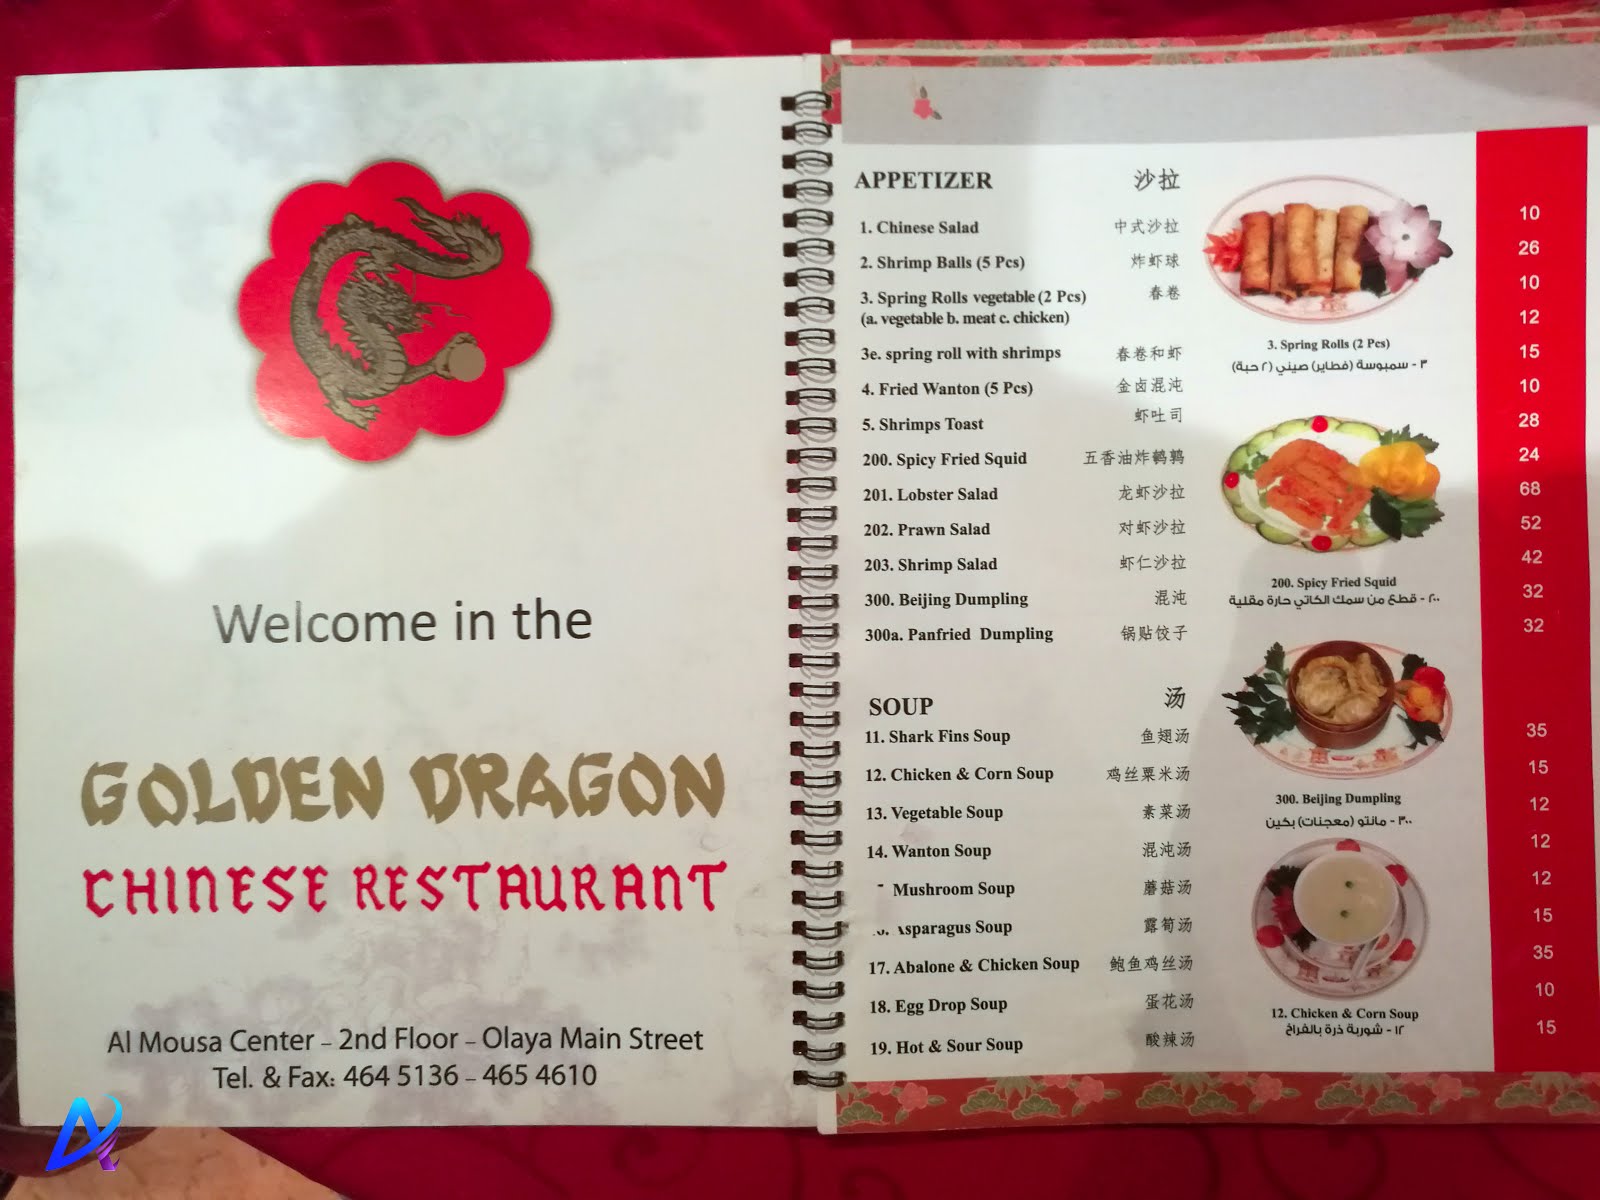 Golden Dragon Restaurant menu